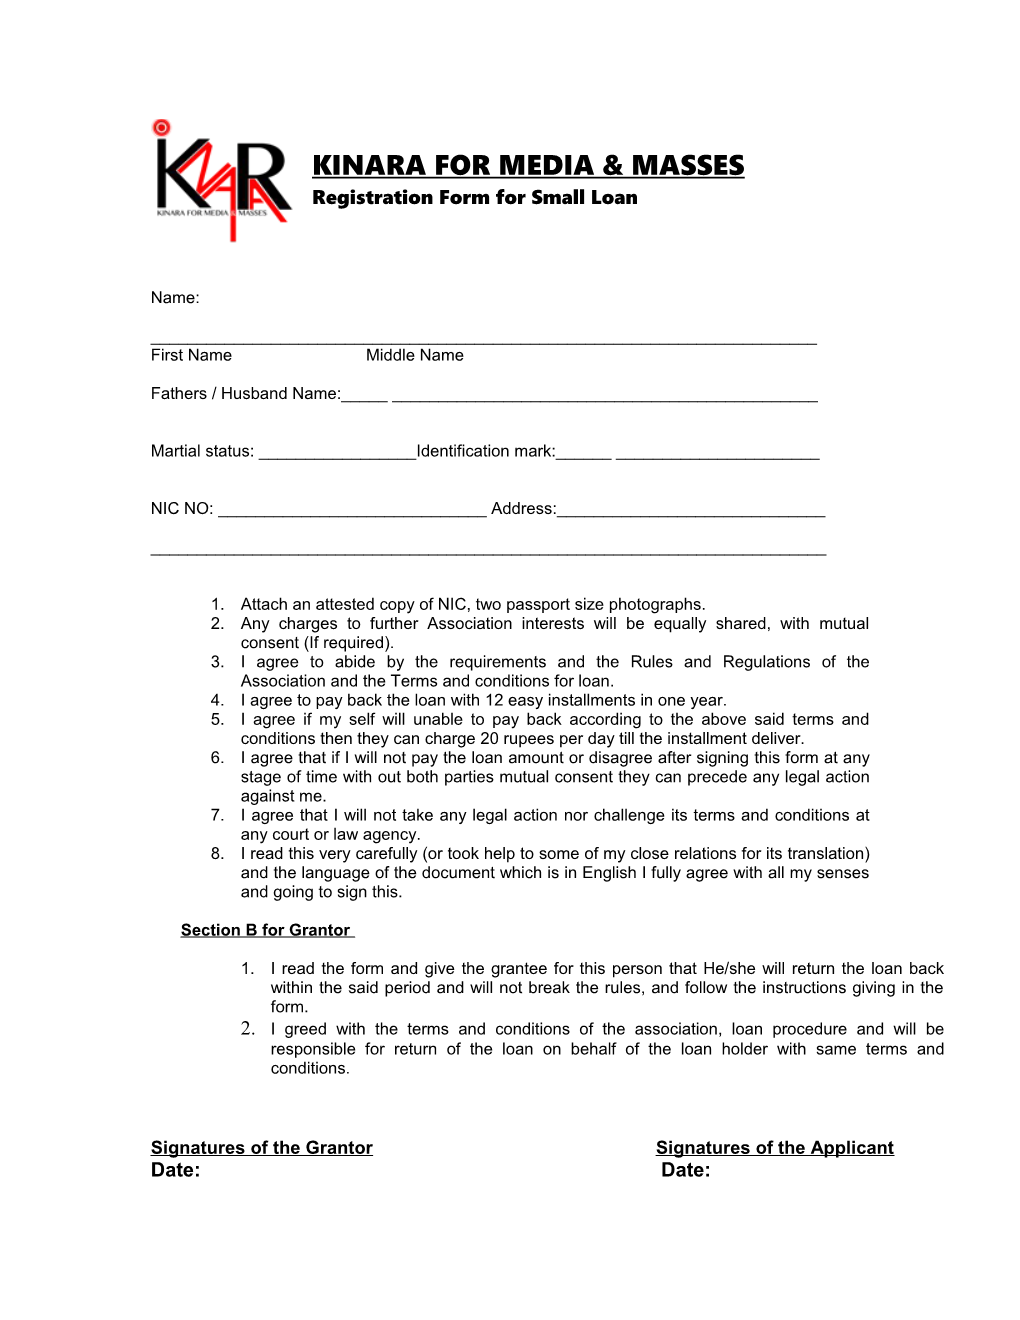 Kinara for Media & Masses